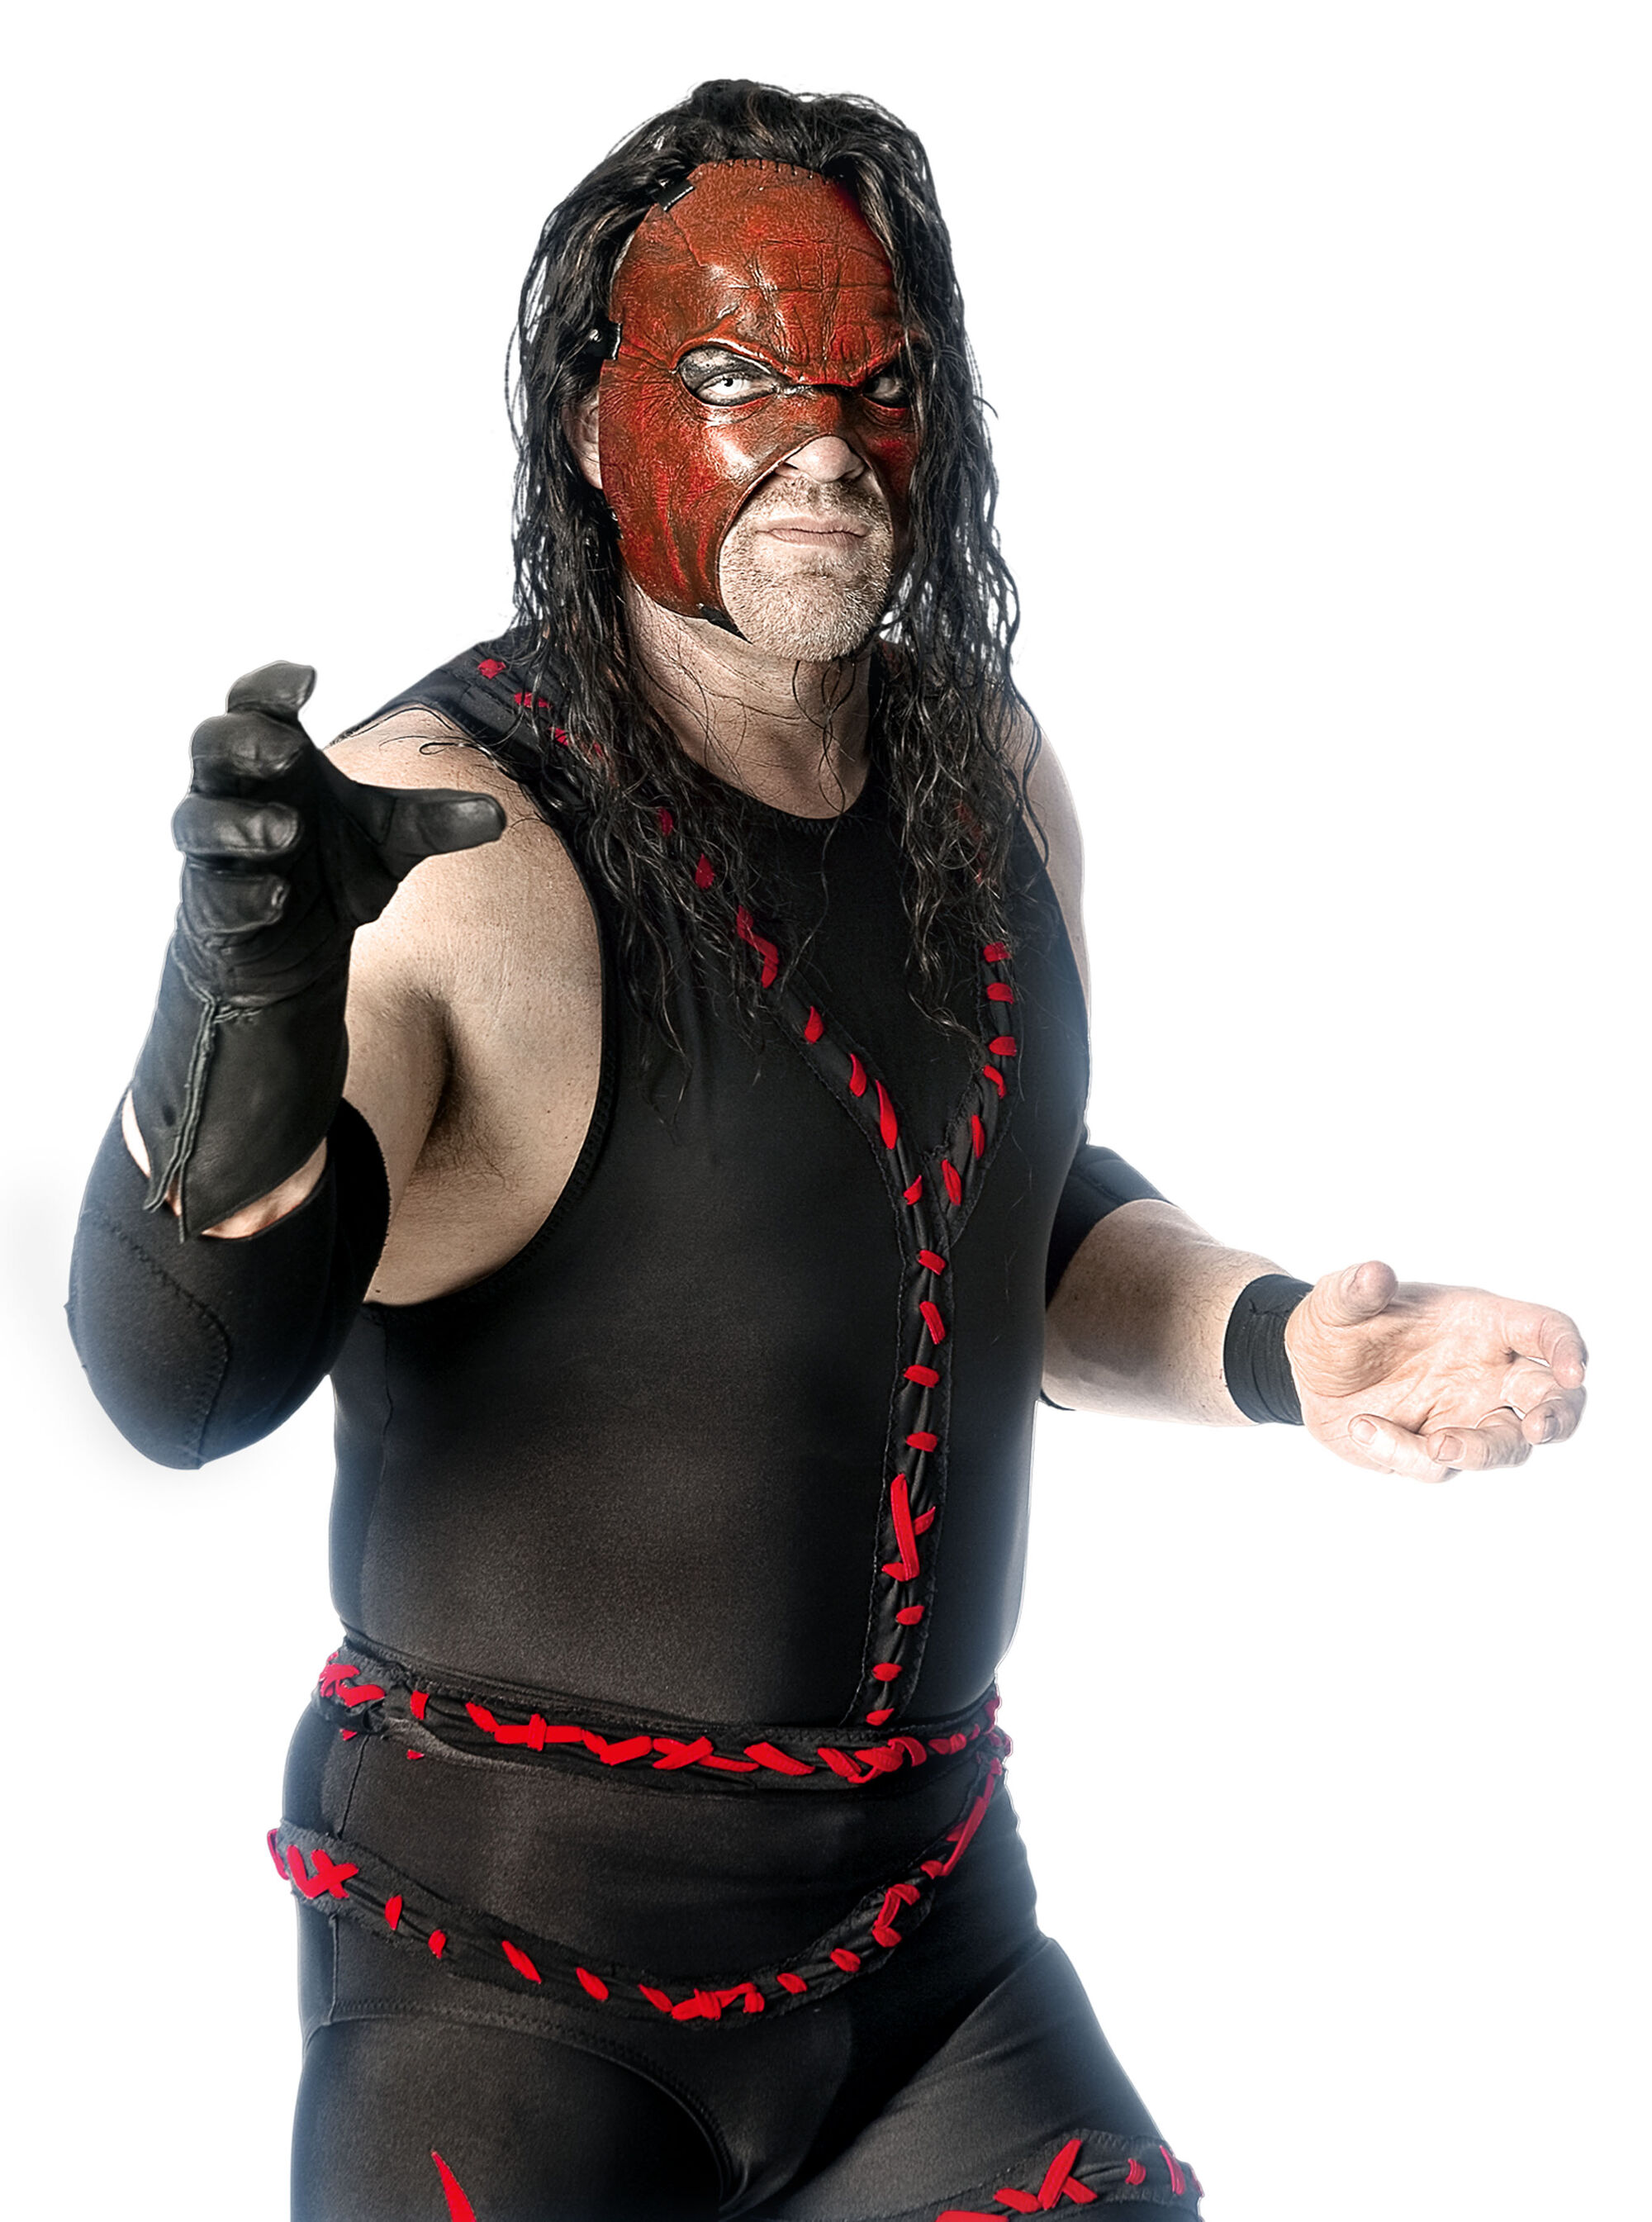 Kane | WWE Wiki | Fandom
